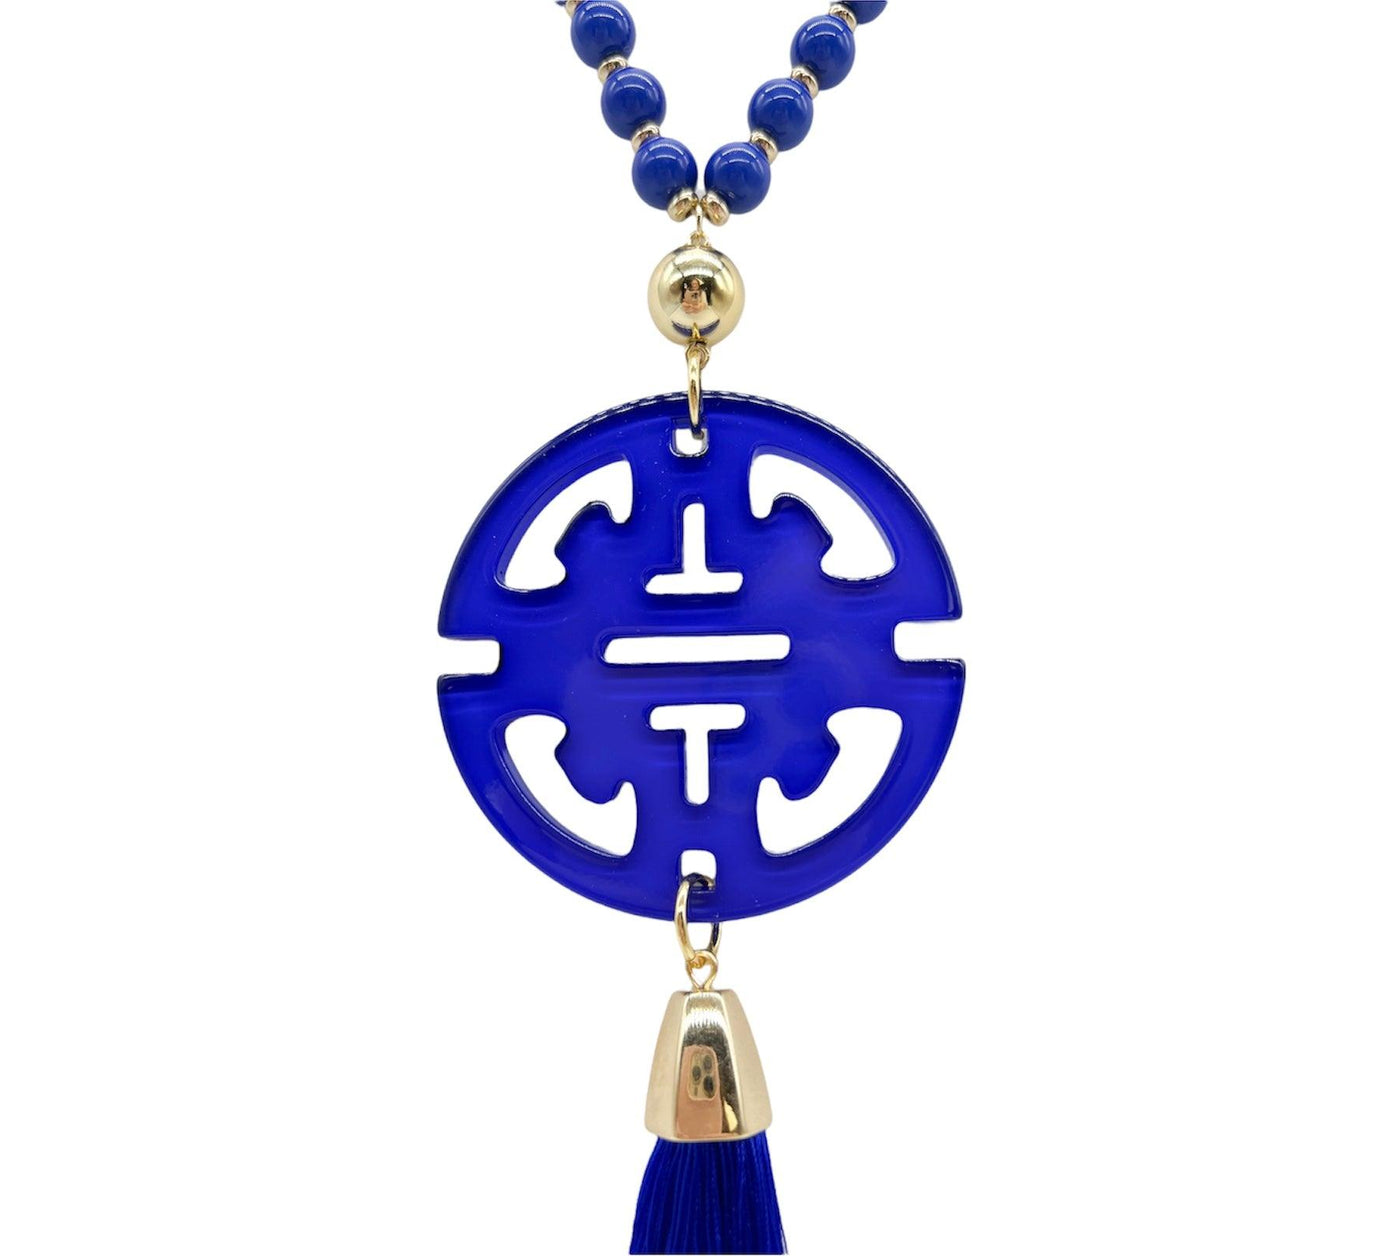 Cobalt blue resin pendant necklace